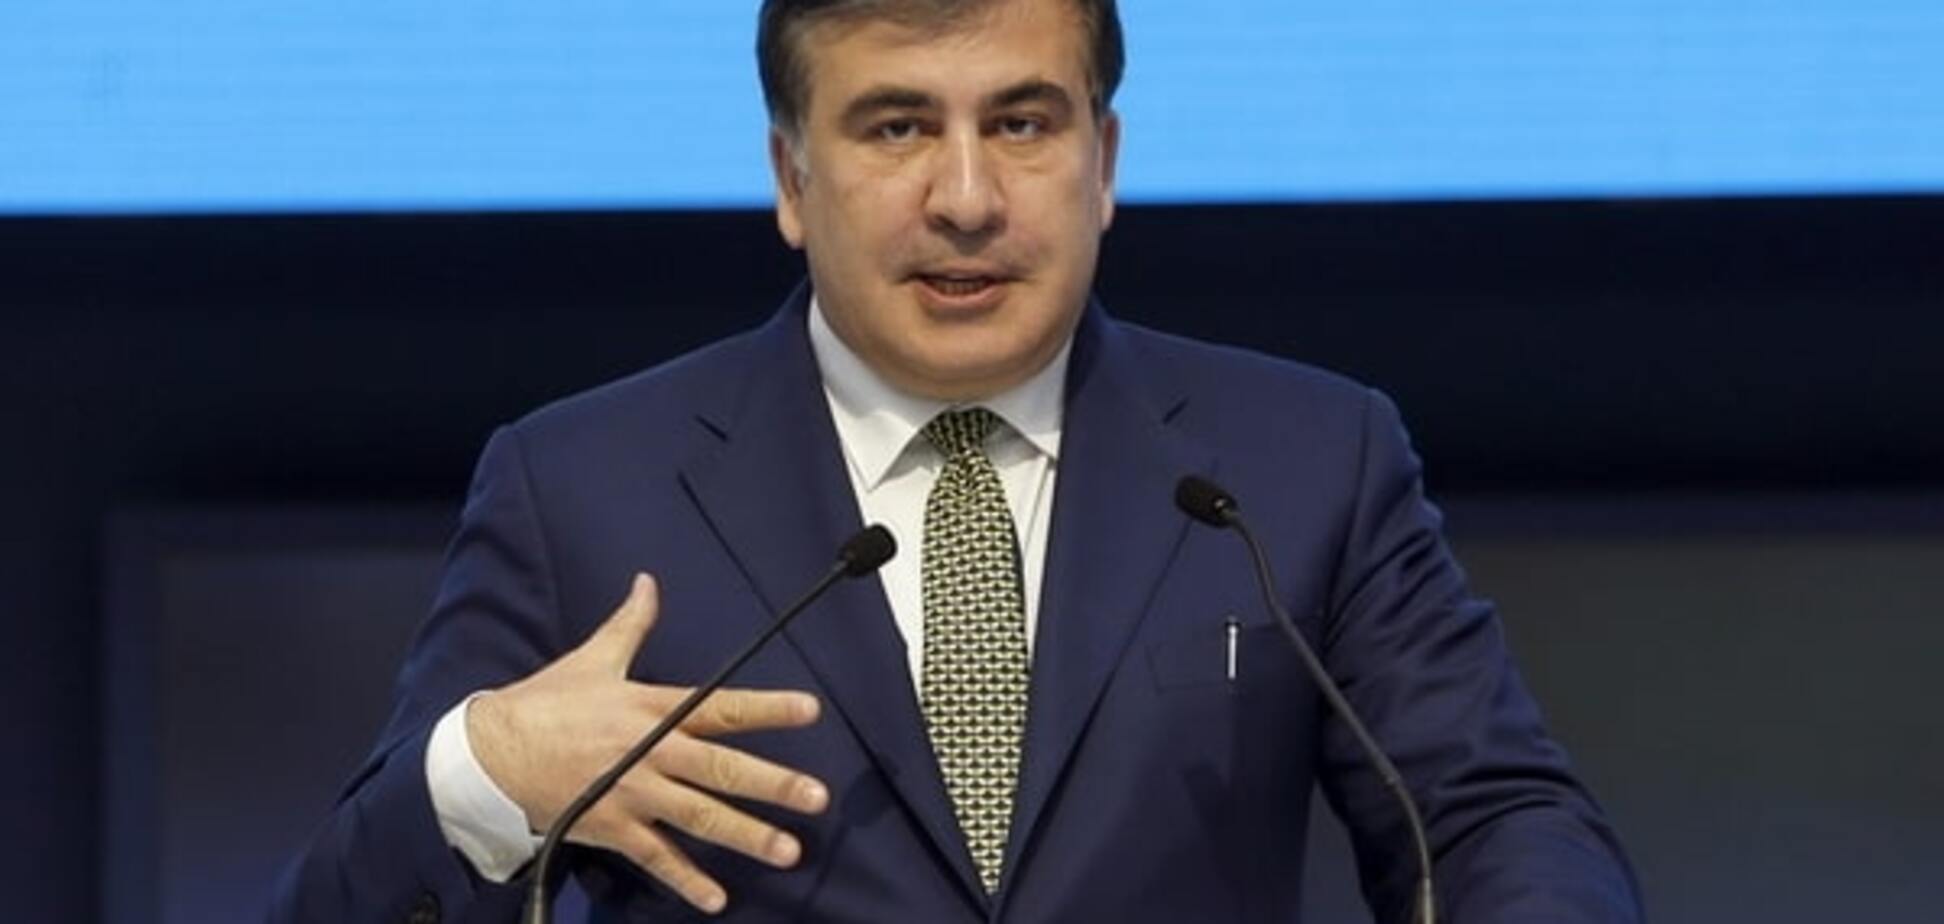 Скандал в Одессе: Саакашвили обвинили в растрате денег на АТО: опубликовано видео